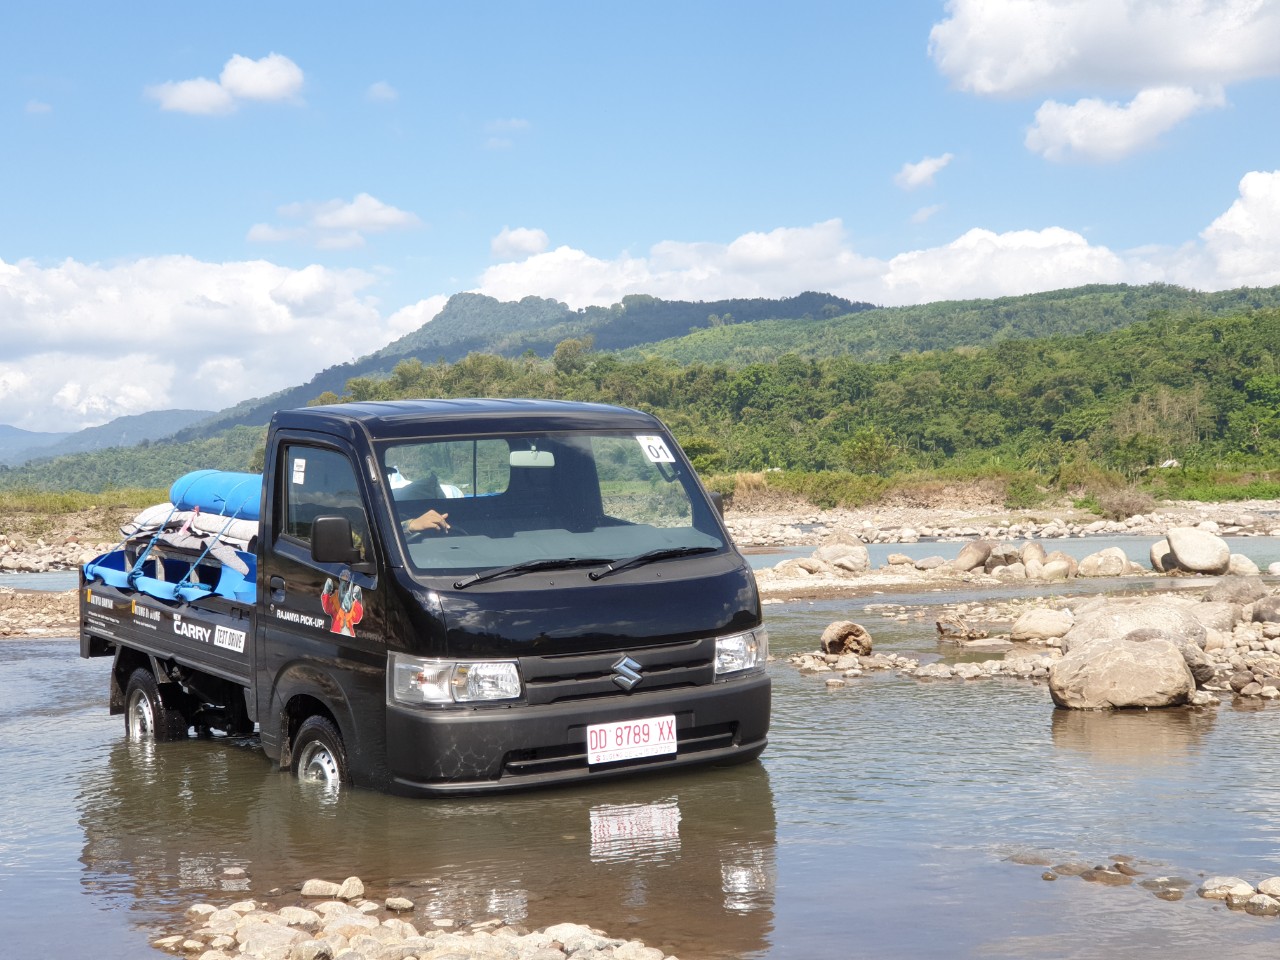 Beli Mobil Suzuki Sekarang, Gratis Asuransi Banjir